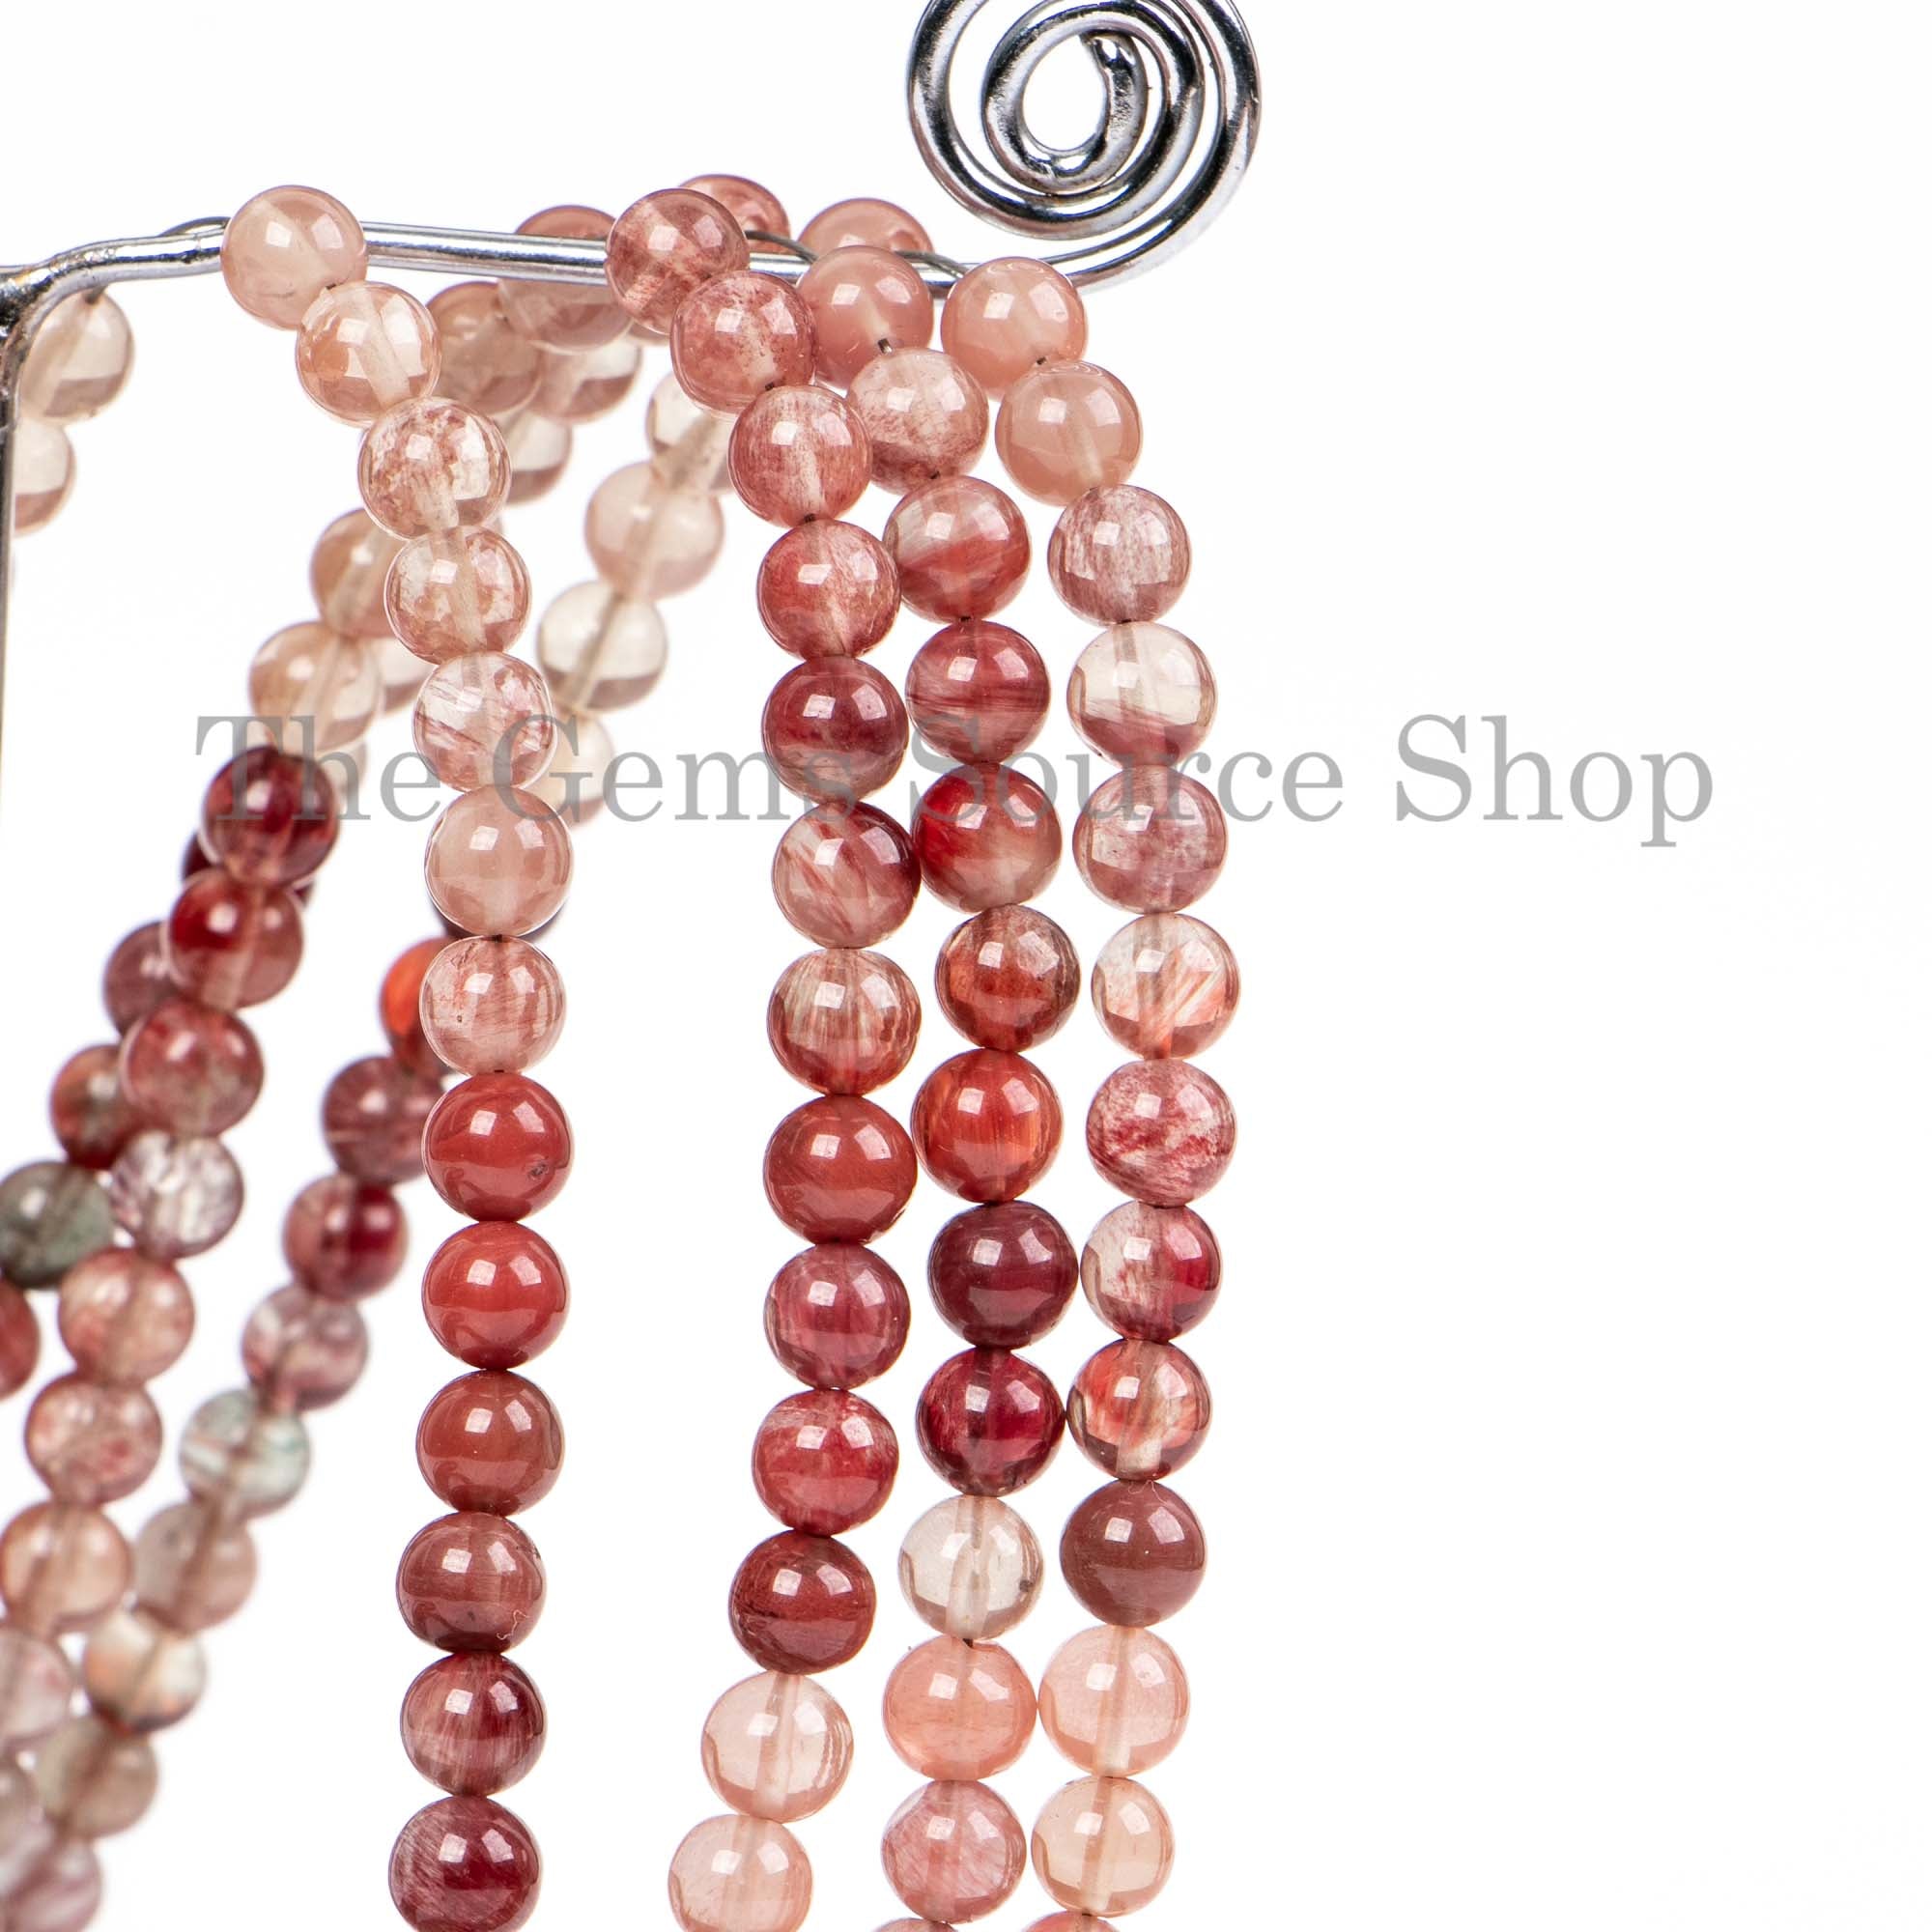 Andesine Labradorite Beads, Labradorite Smooth Round Beads, Plain Labradorite Beads, Gemstone Beads